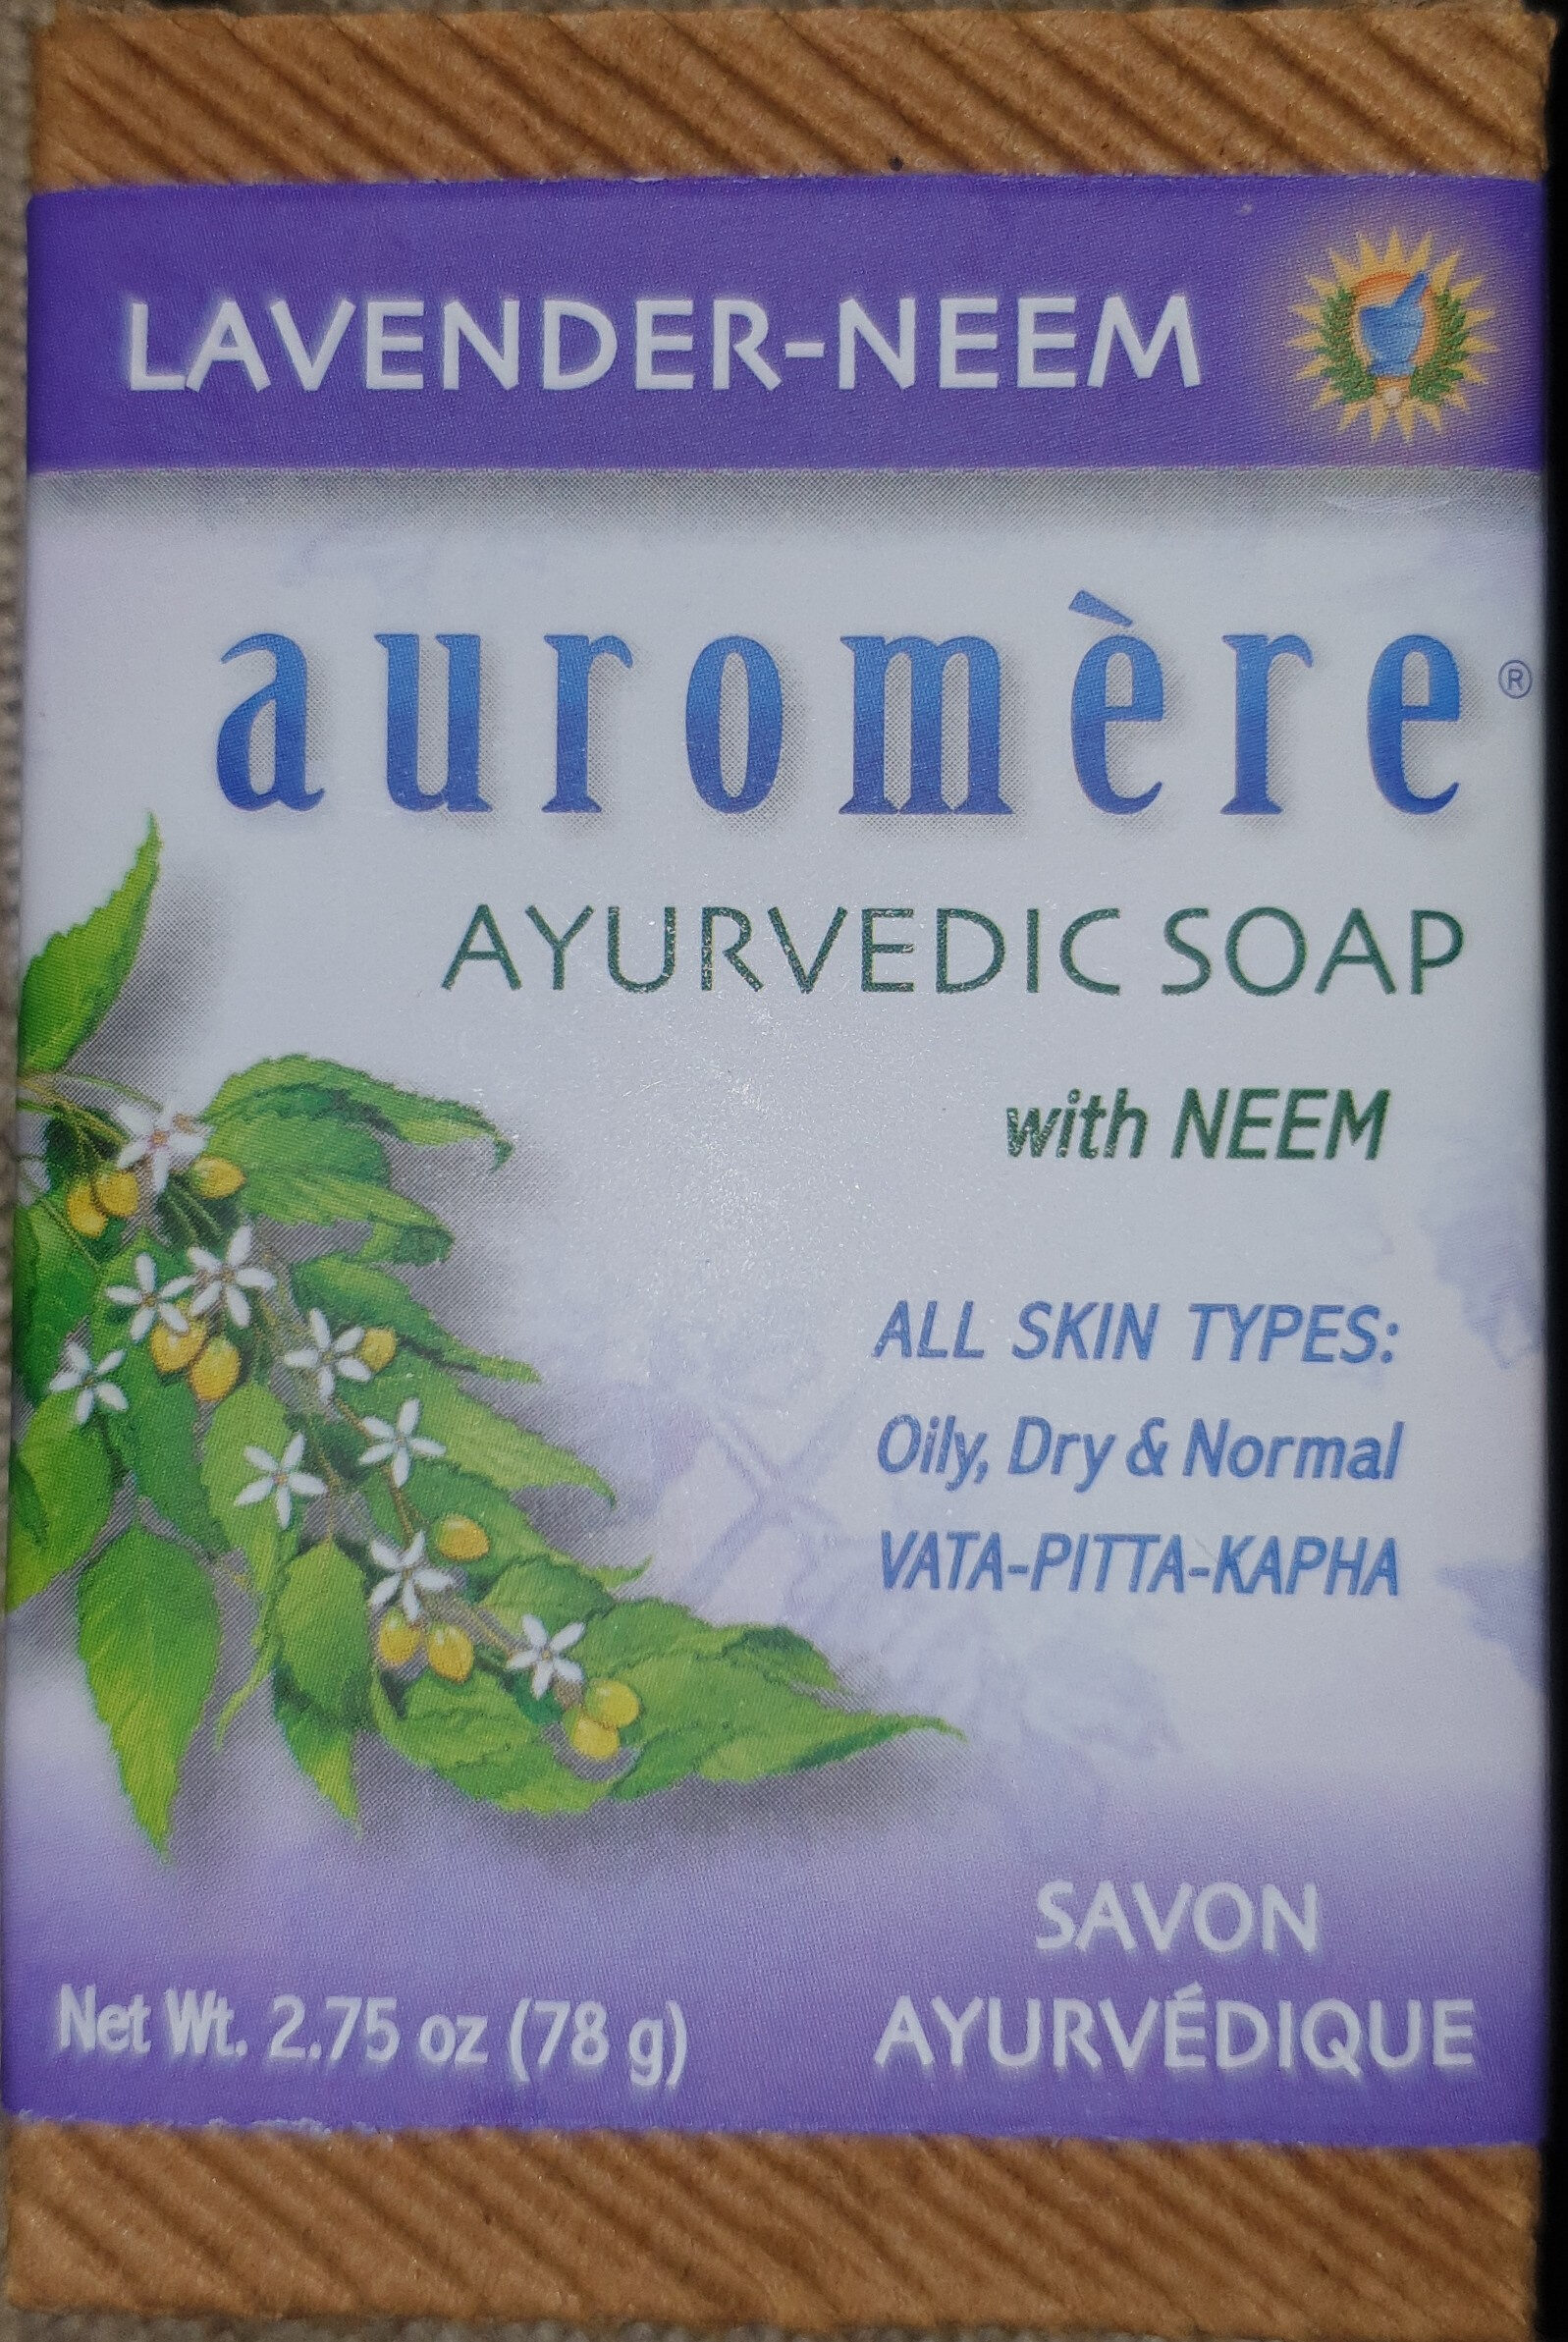 Ayurvedic Soap with Neem: Lavender-Neem - Produit - en